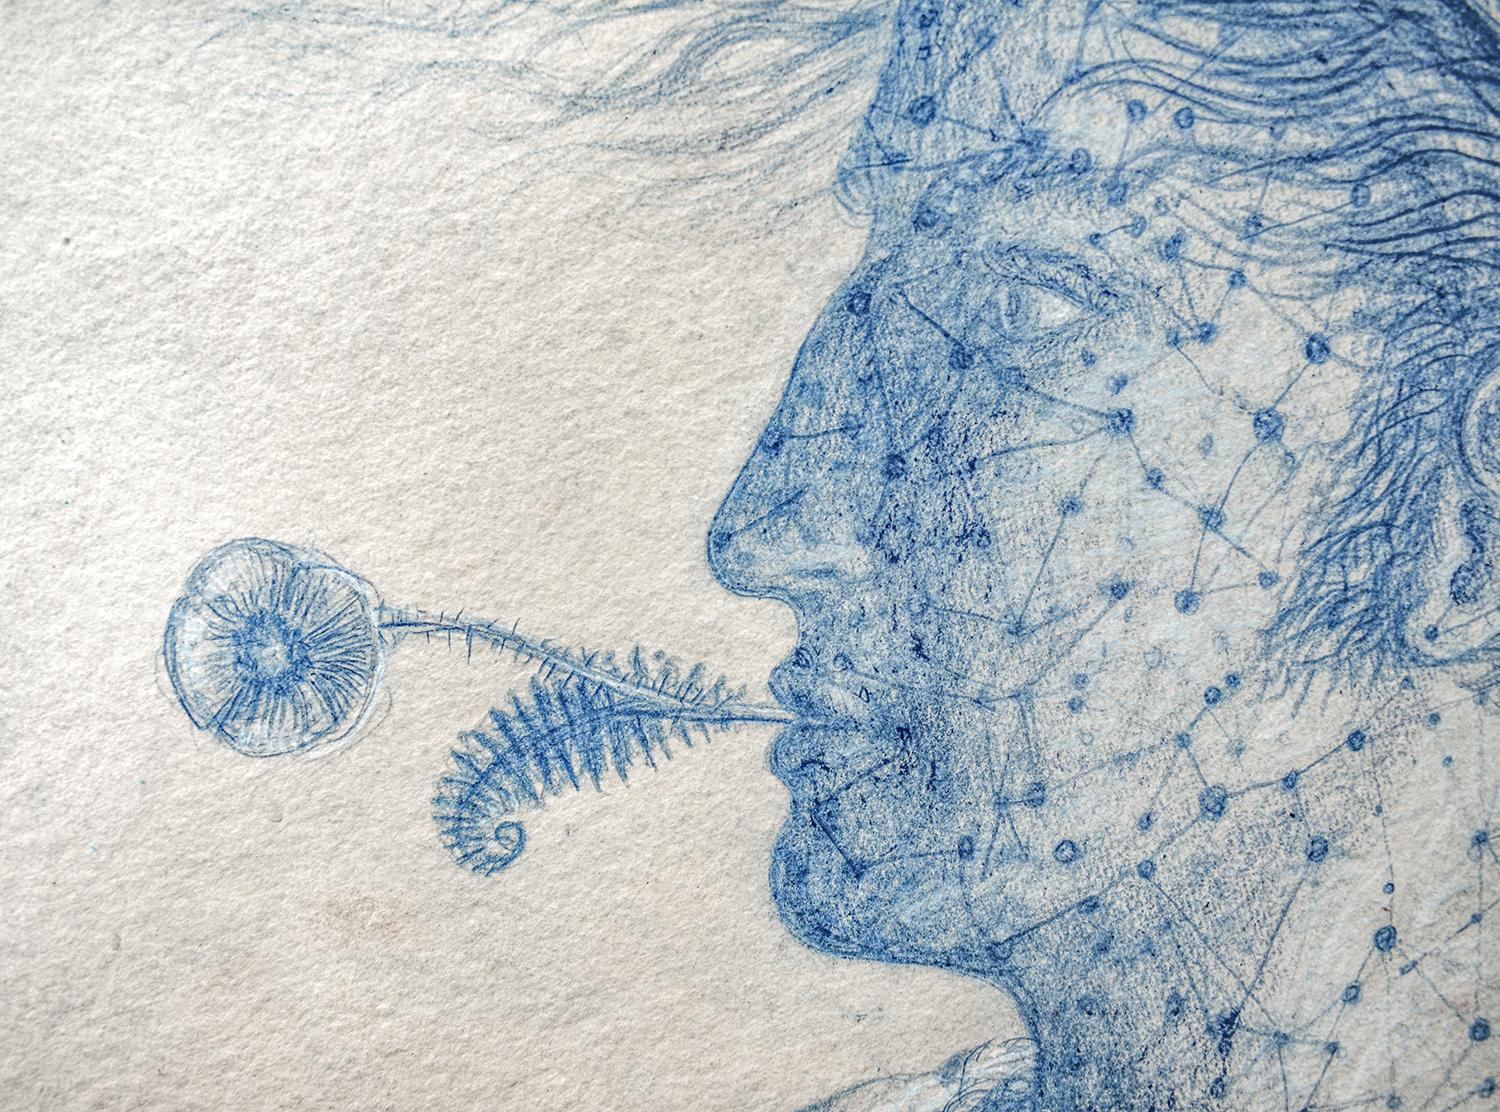 Poet's Augury (Round Portrait Drawing in Blue Pastel by Kahn & Selesnick) - Art by Nicholas Kahn & Richard Selesnick